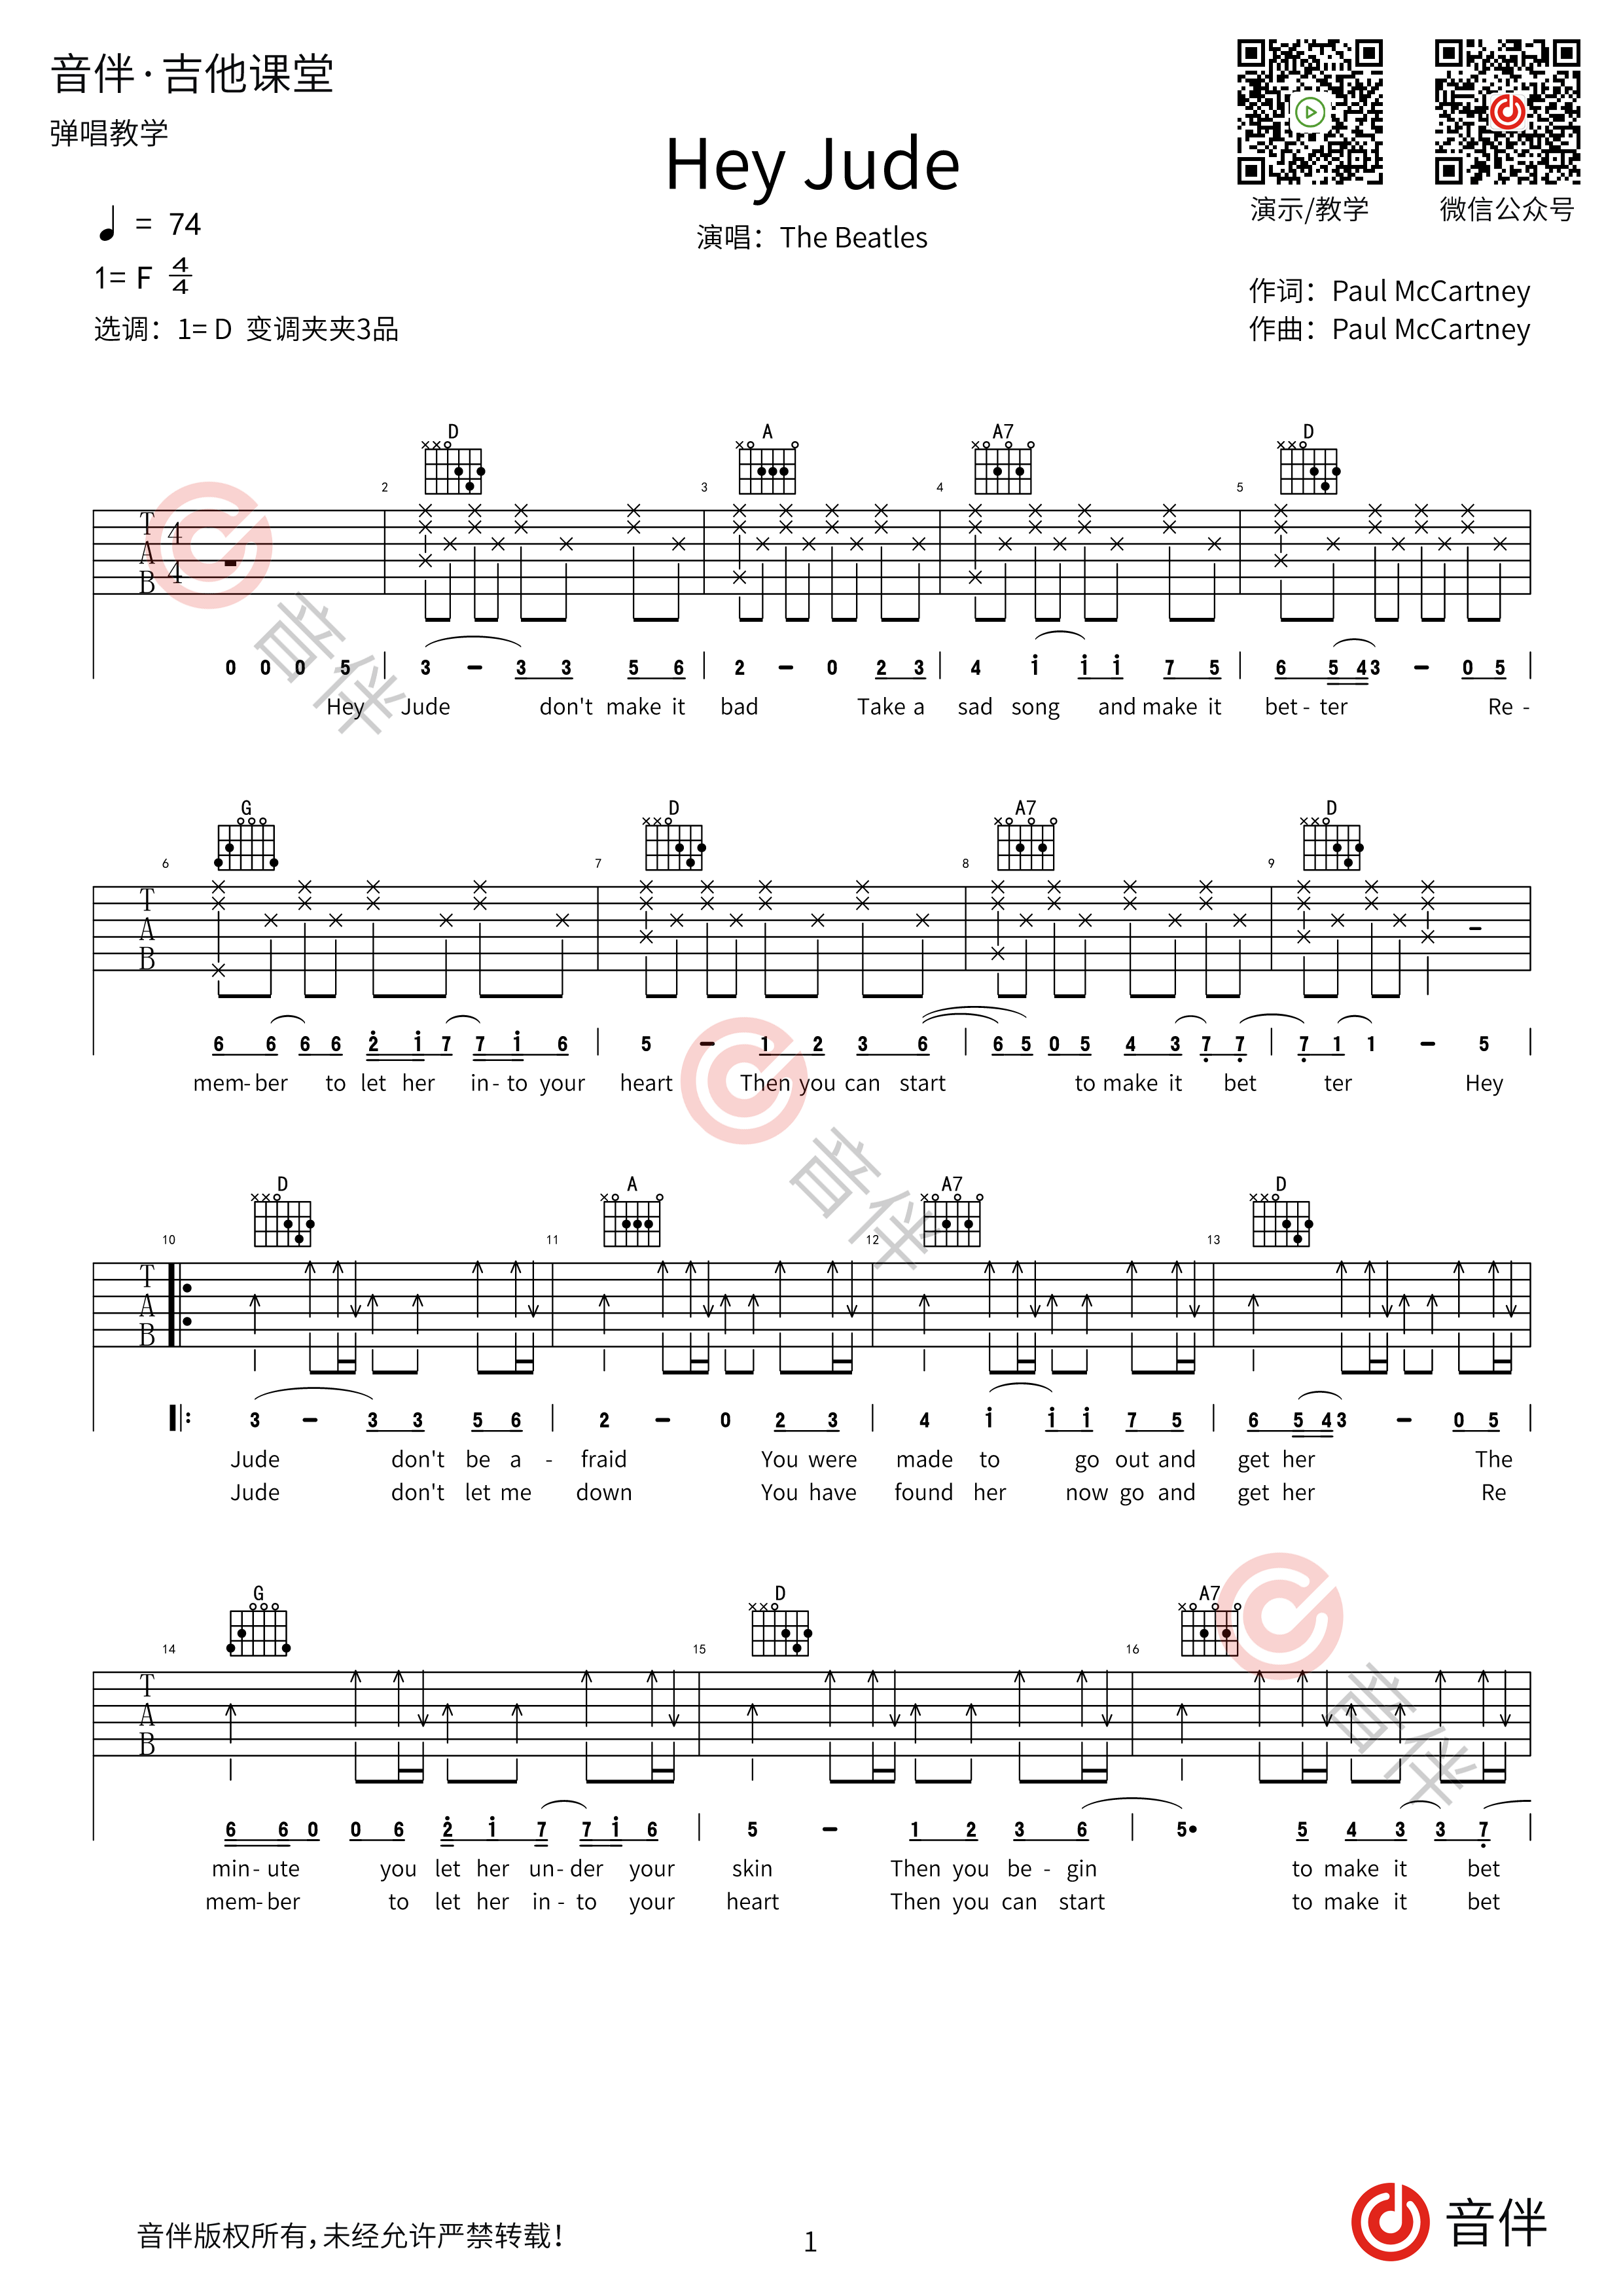 The Beatles-Hey Jude 琴譜pdf-香港流行鋼琴協會琴譜下載 ★